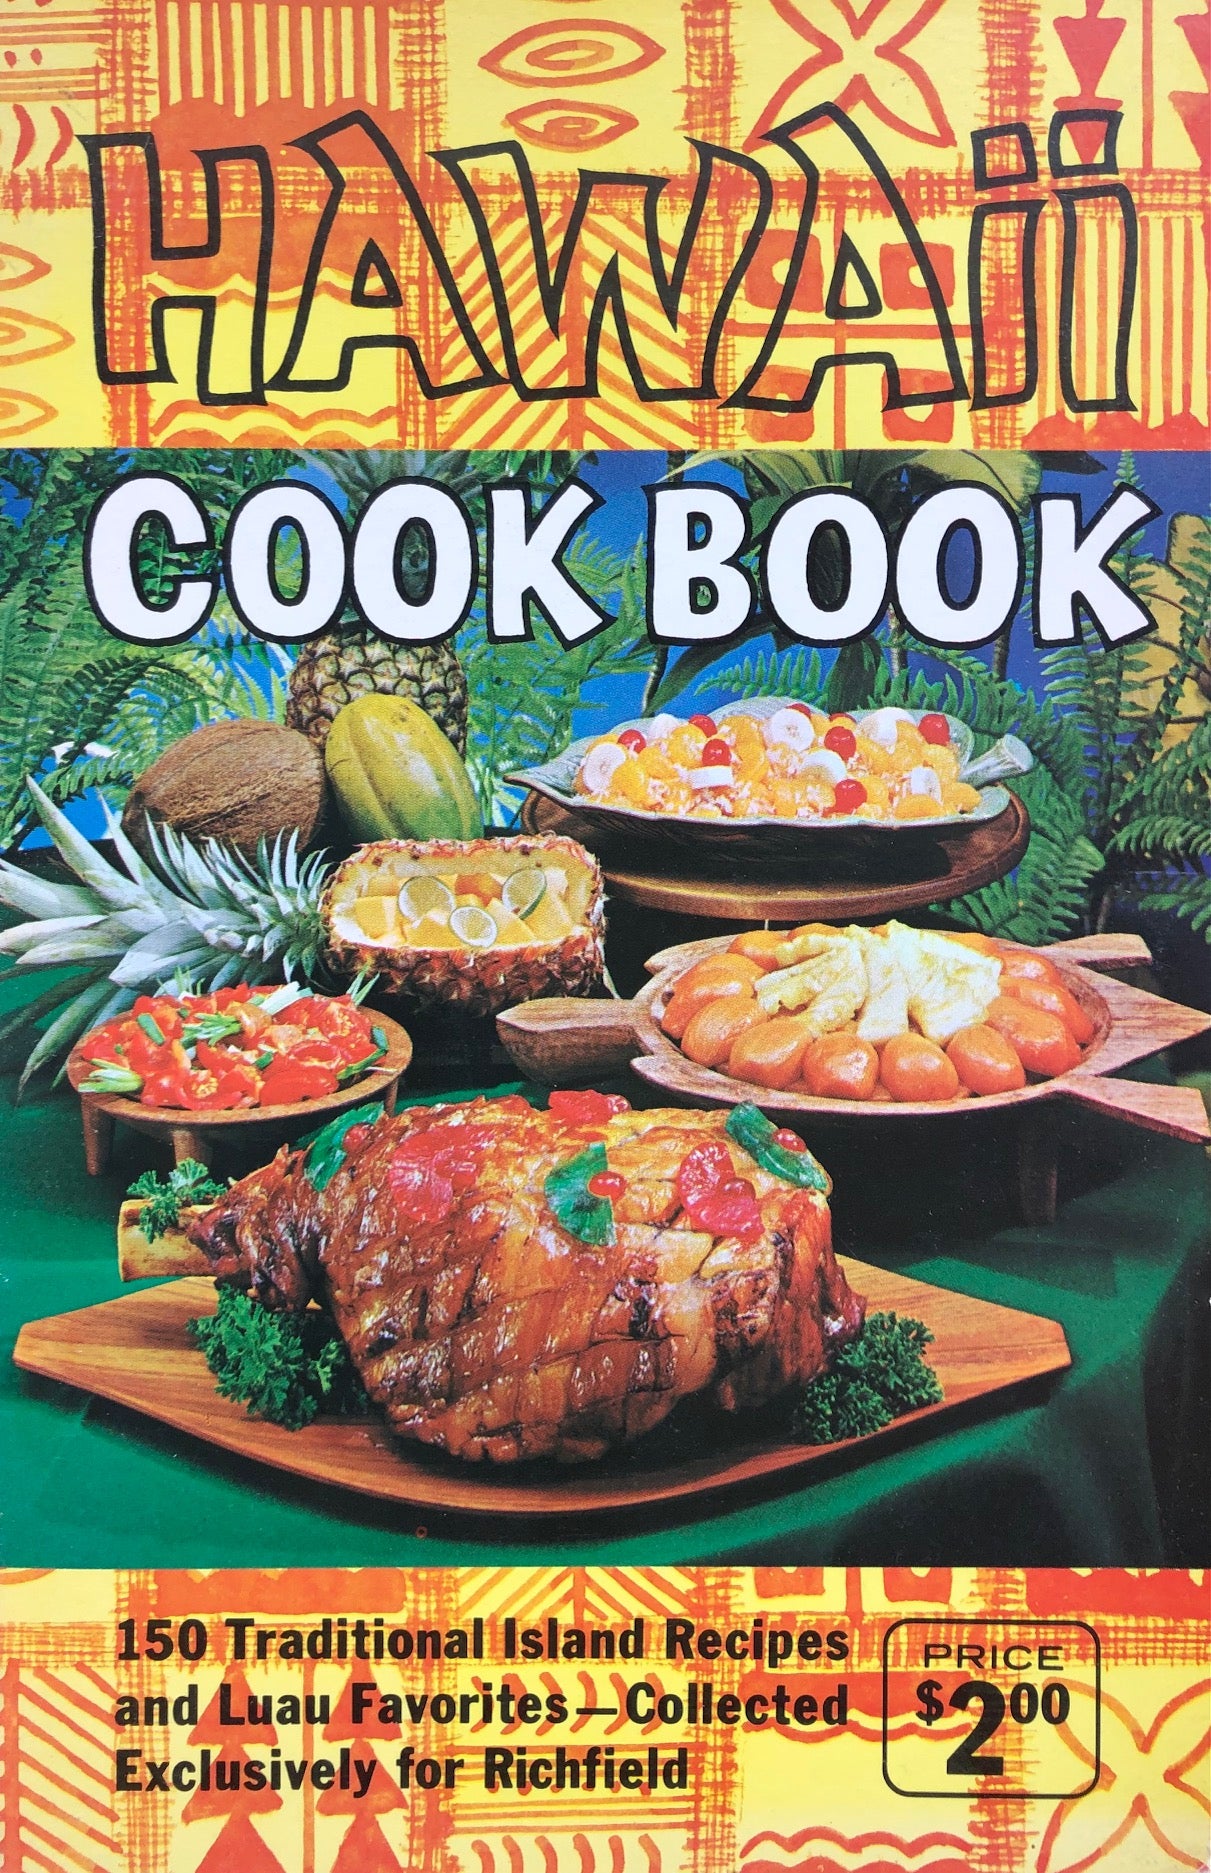 (Hawaiian) Don FitzGerald, ed. The Pacific House Hawaii Cook Book.